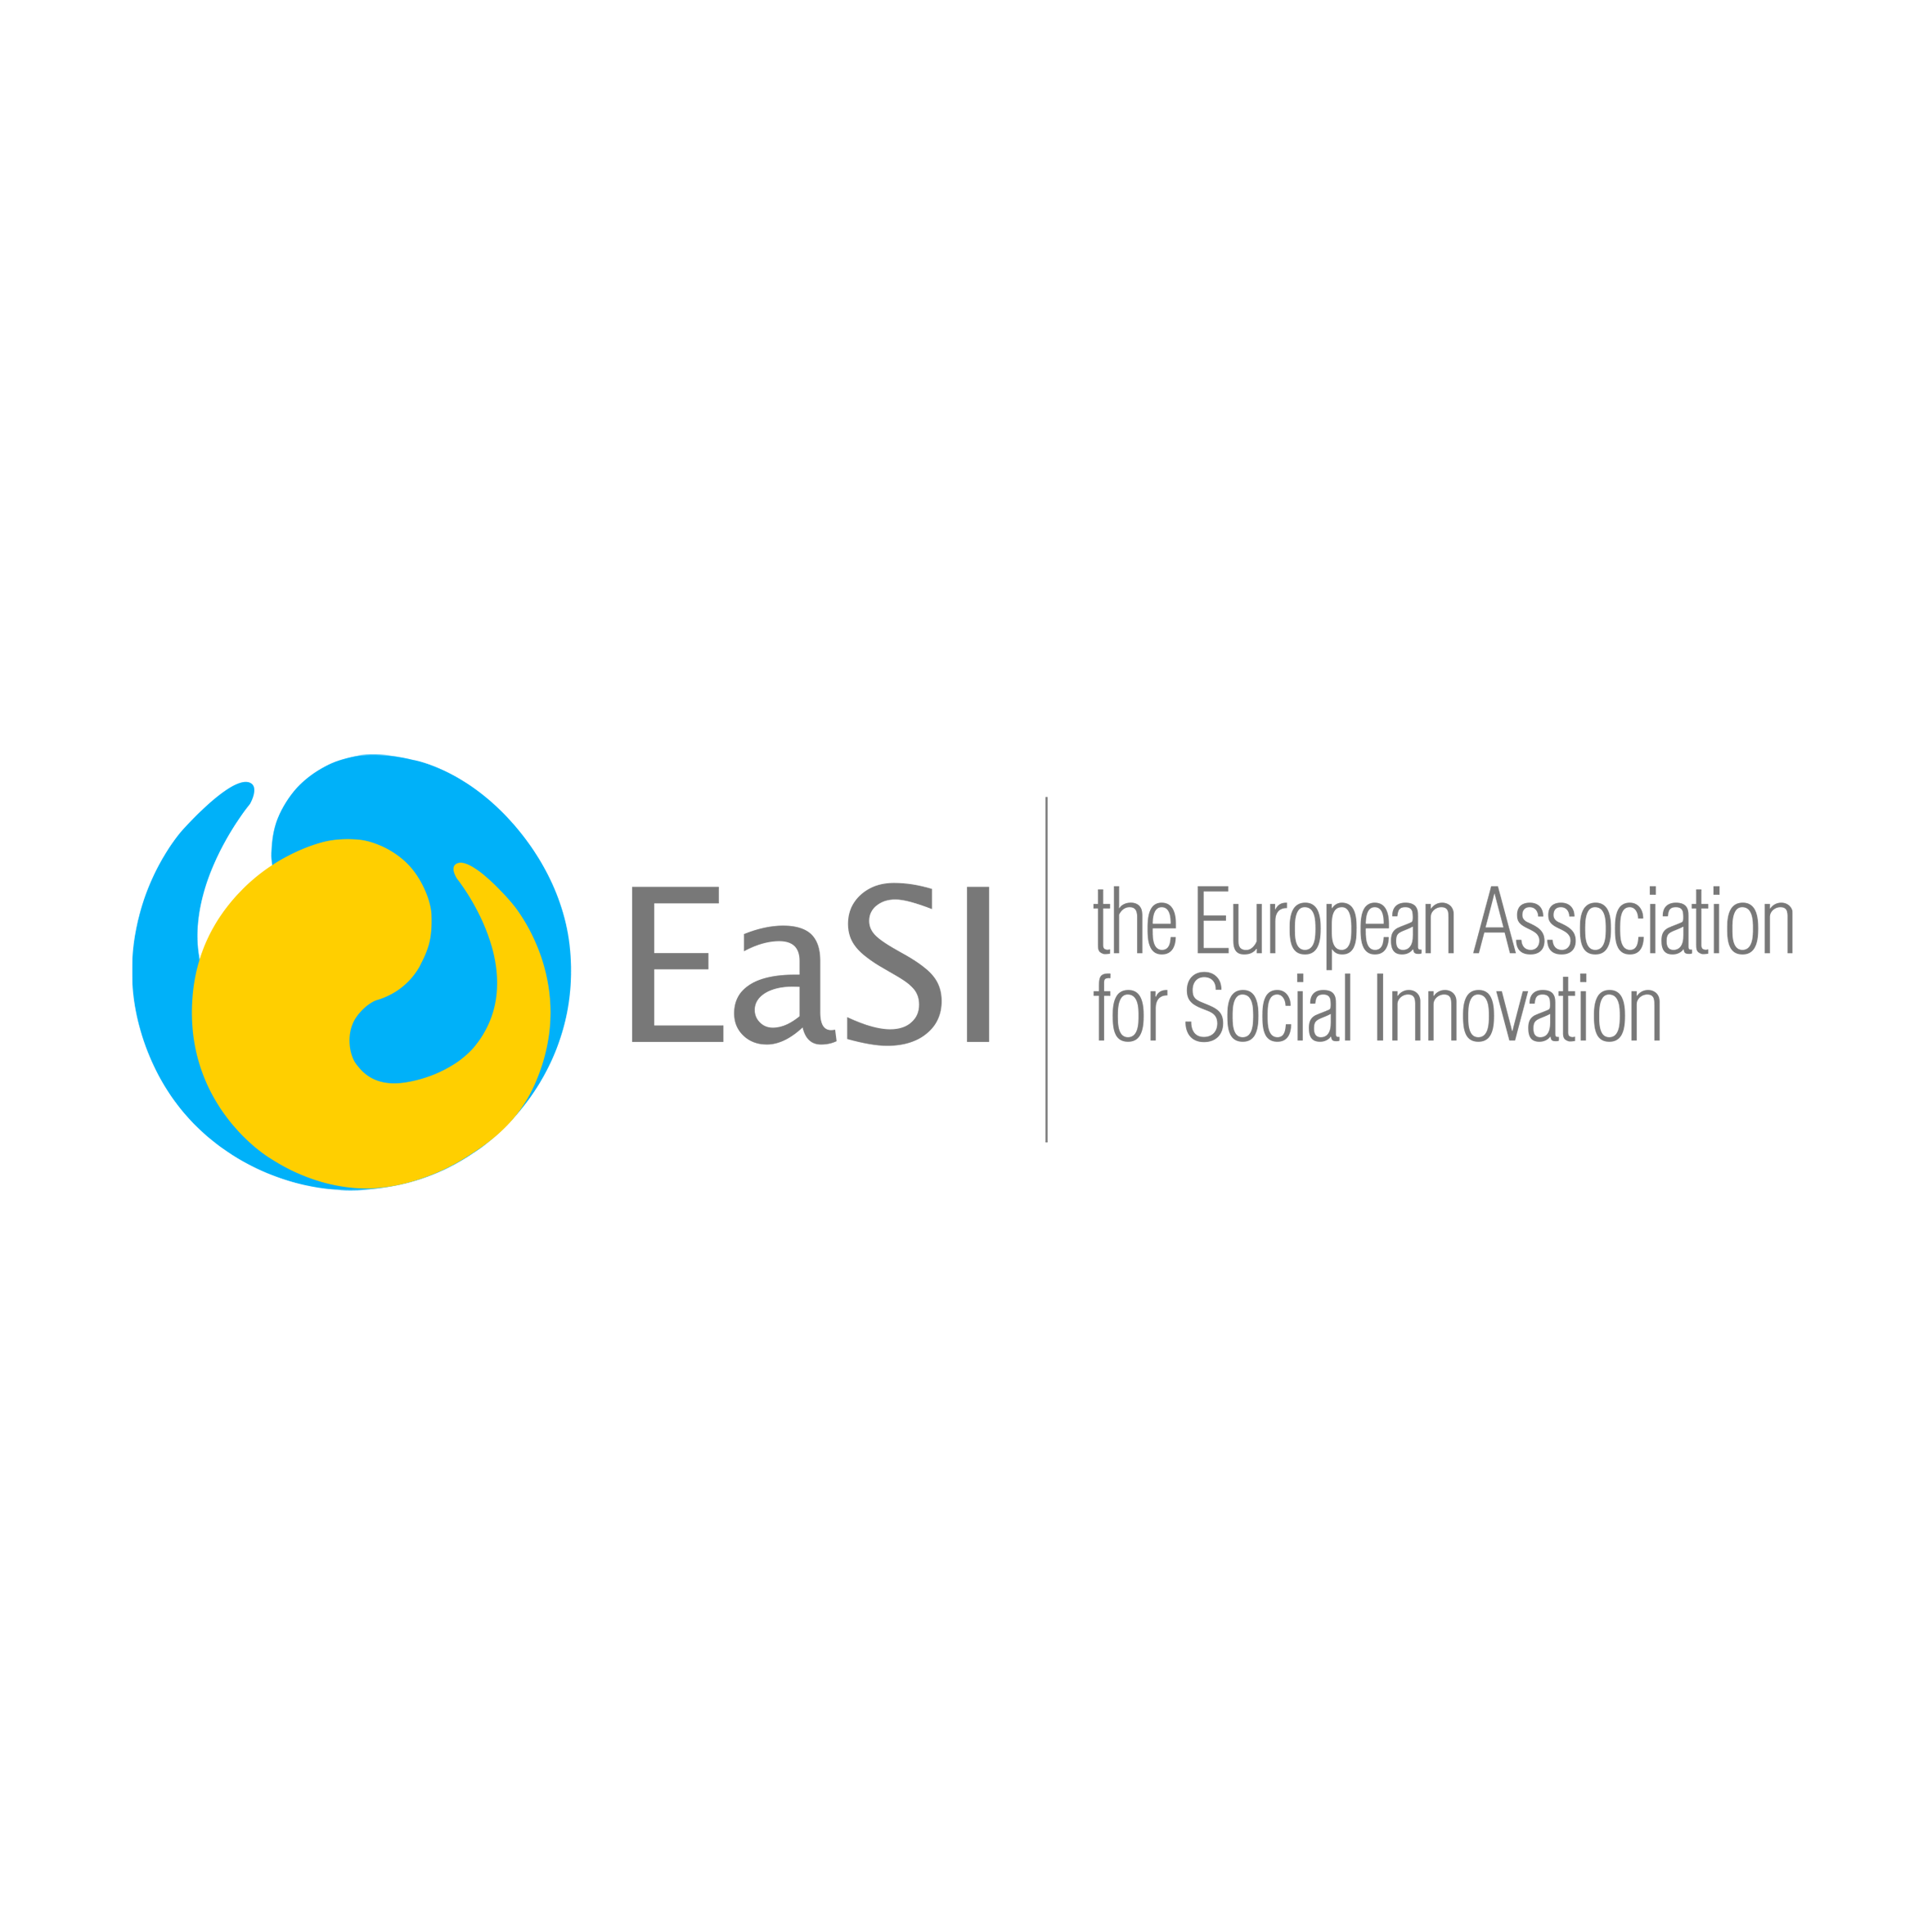 EaSi the European Association for Social Innovation - Romania